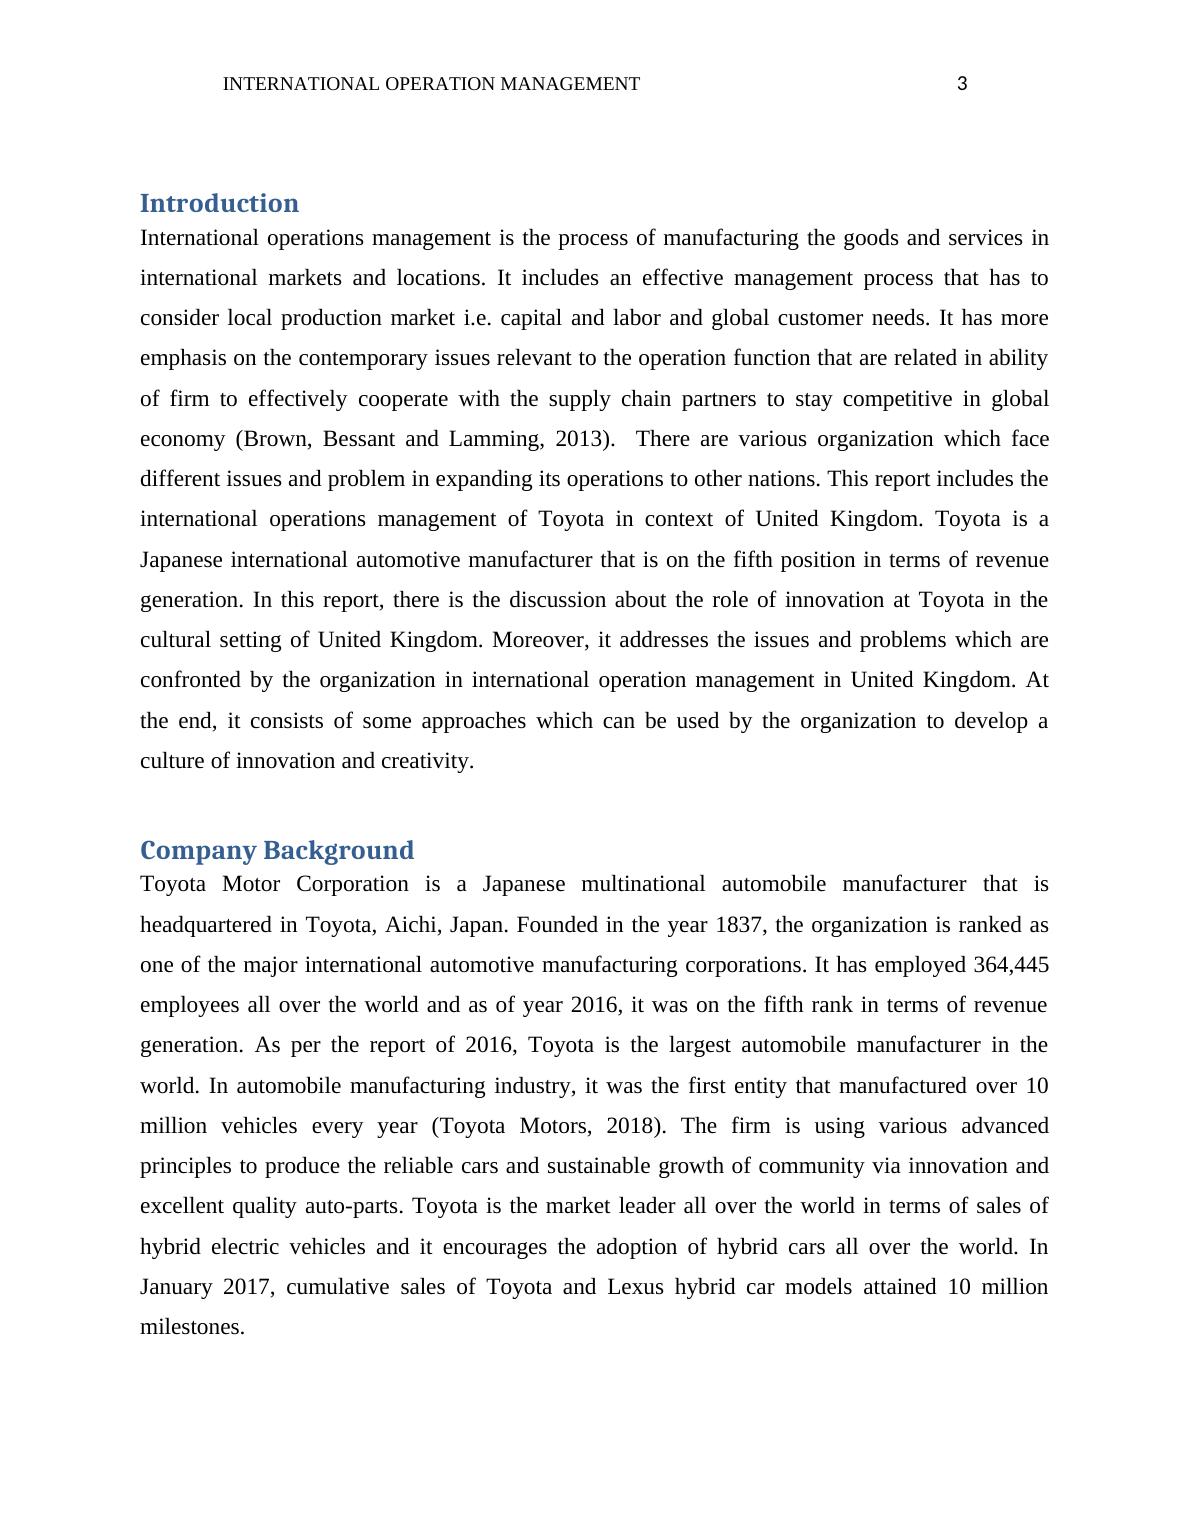 International Operations Management PDF_3